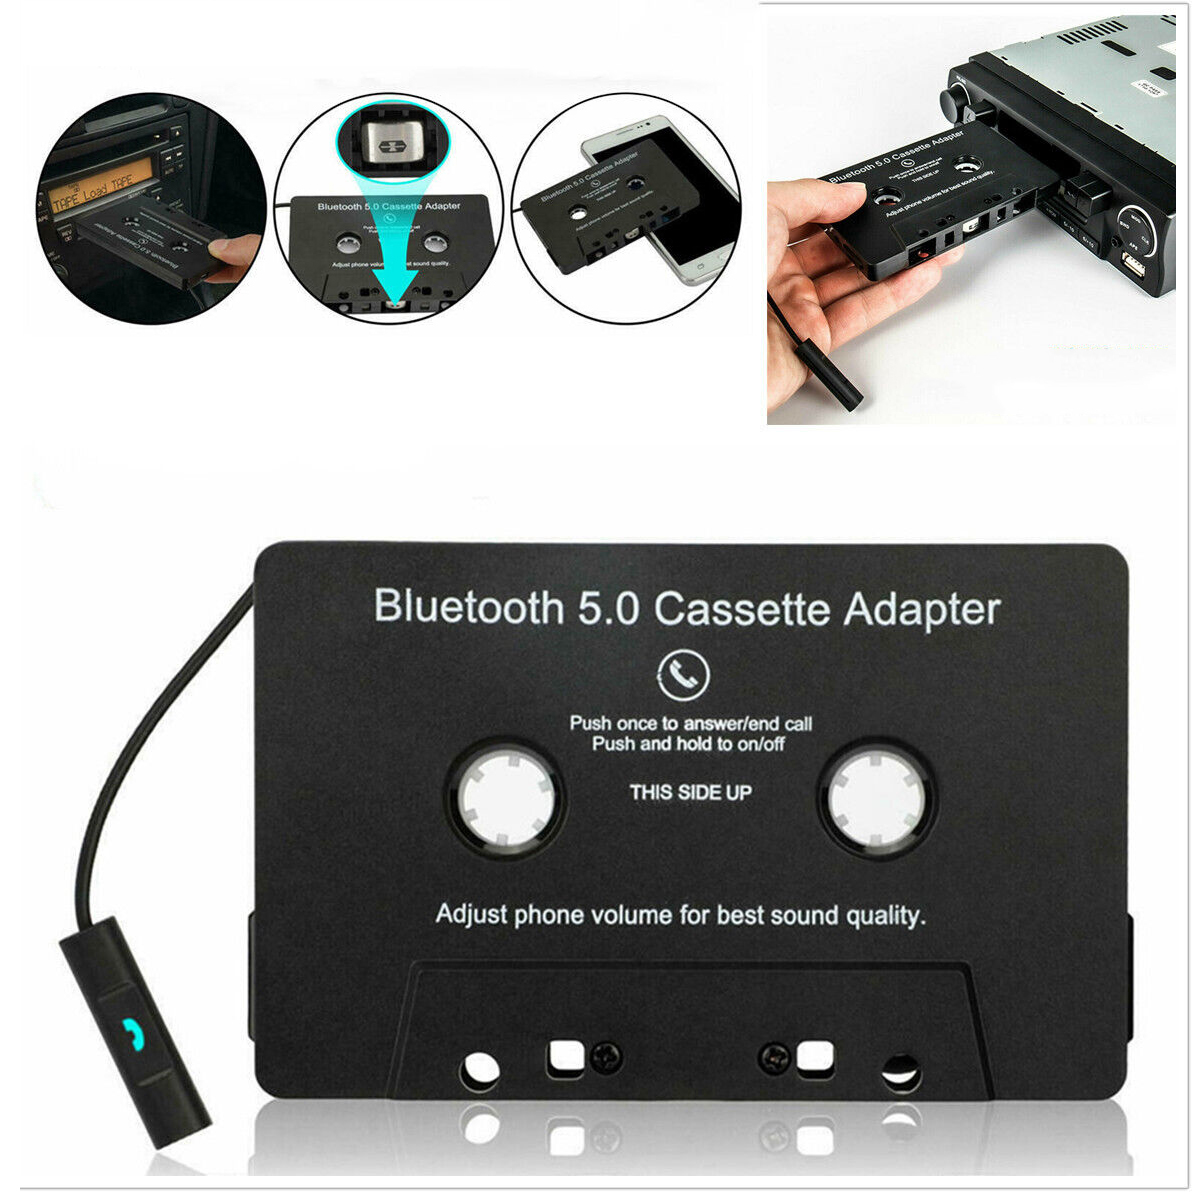 Převodník CASSETTE ADAPTER Bluetooth Kazeta Magnet za 409 Kč - Allegro